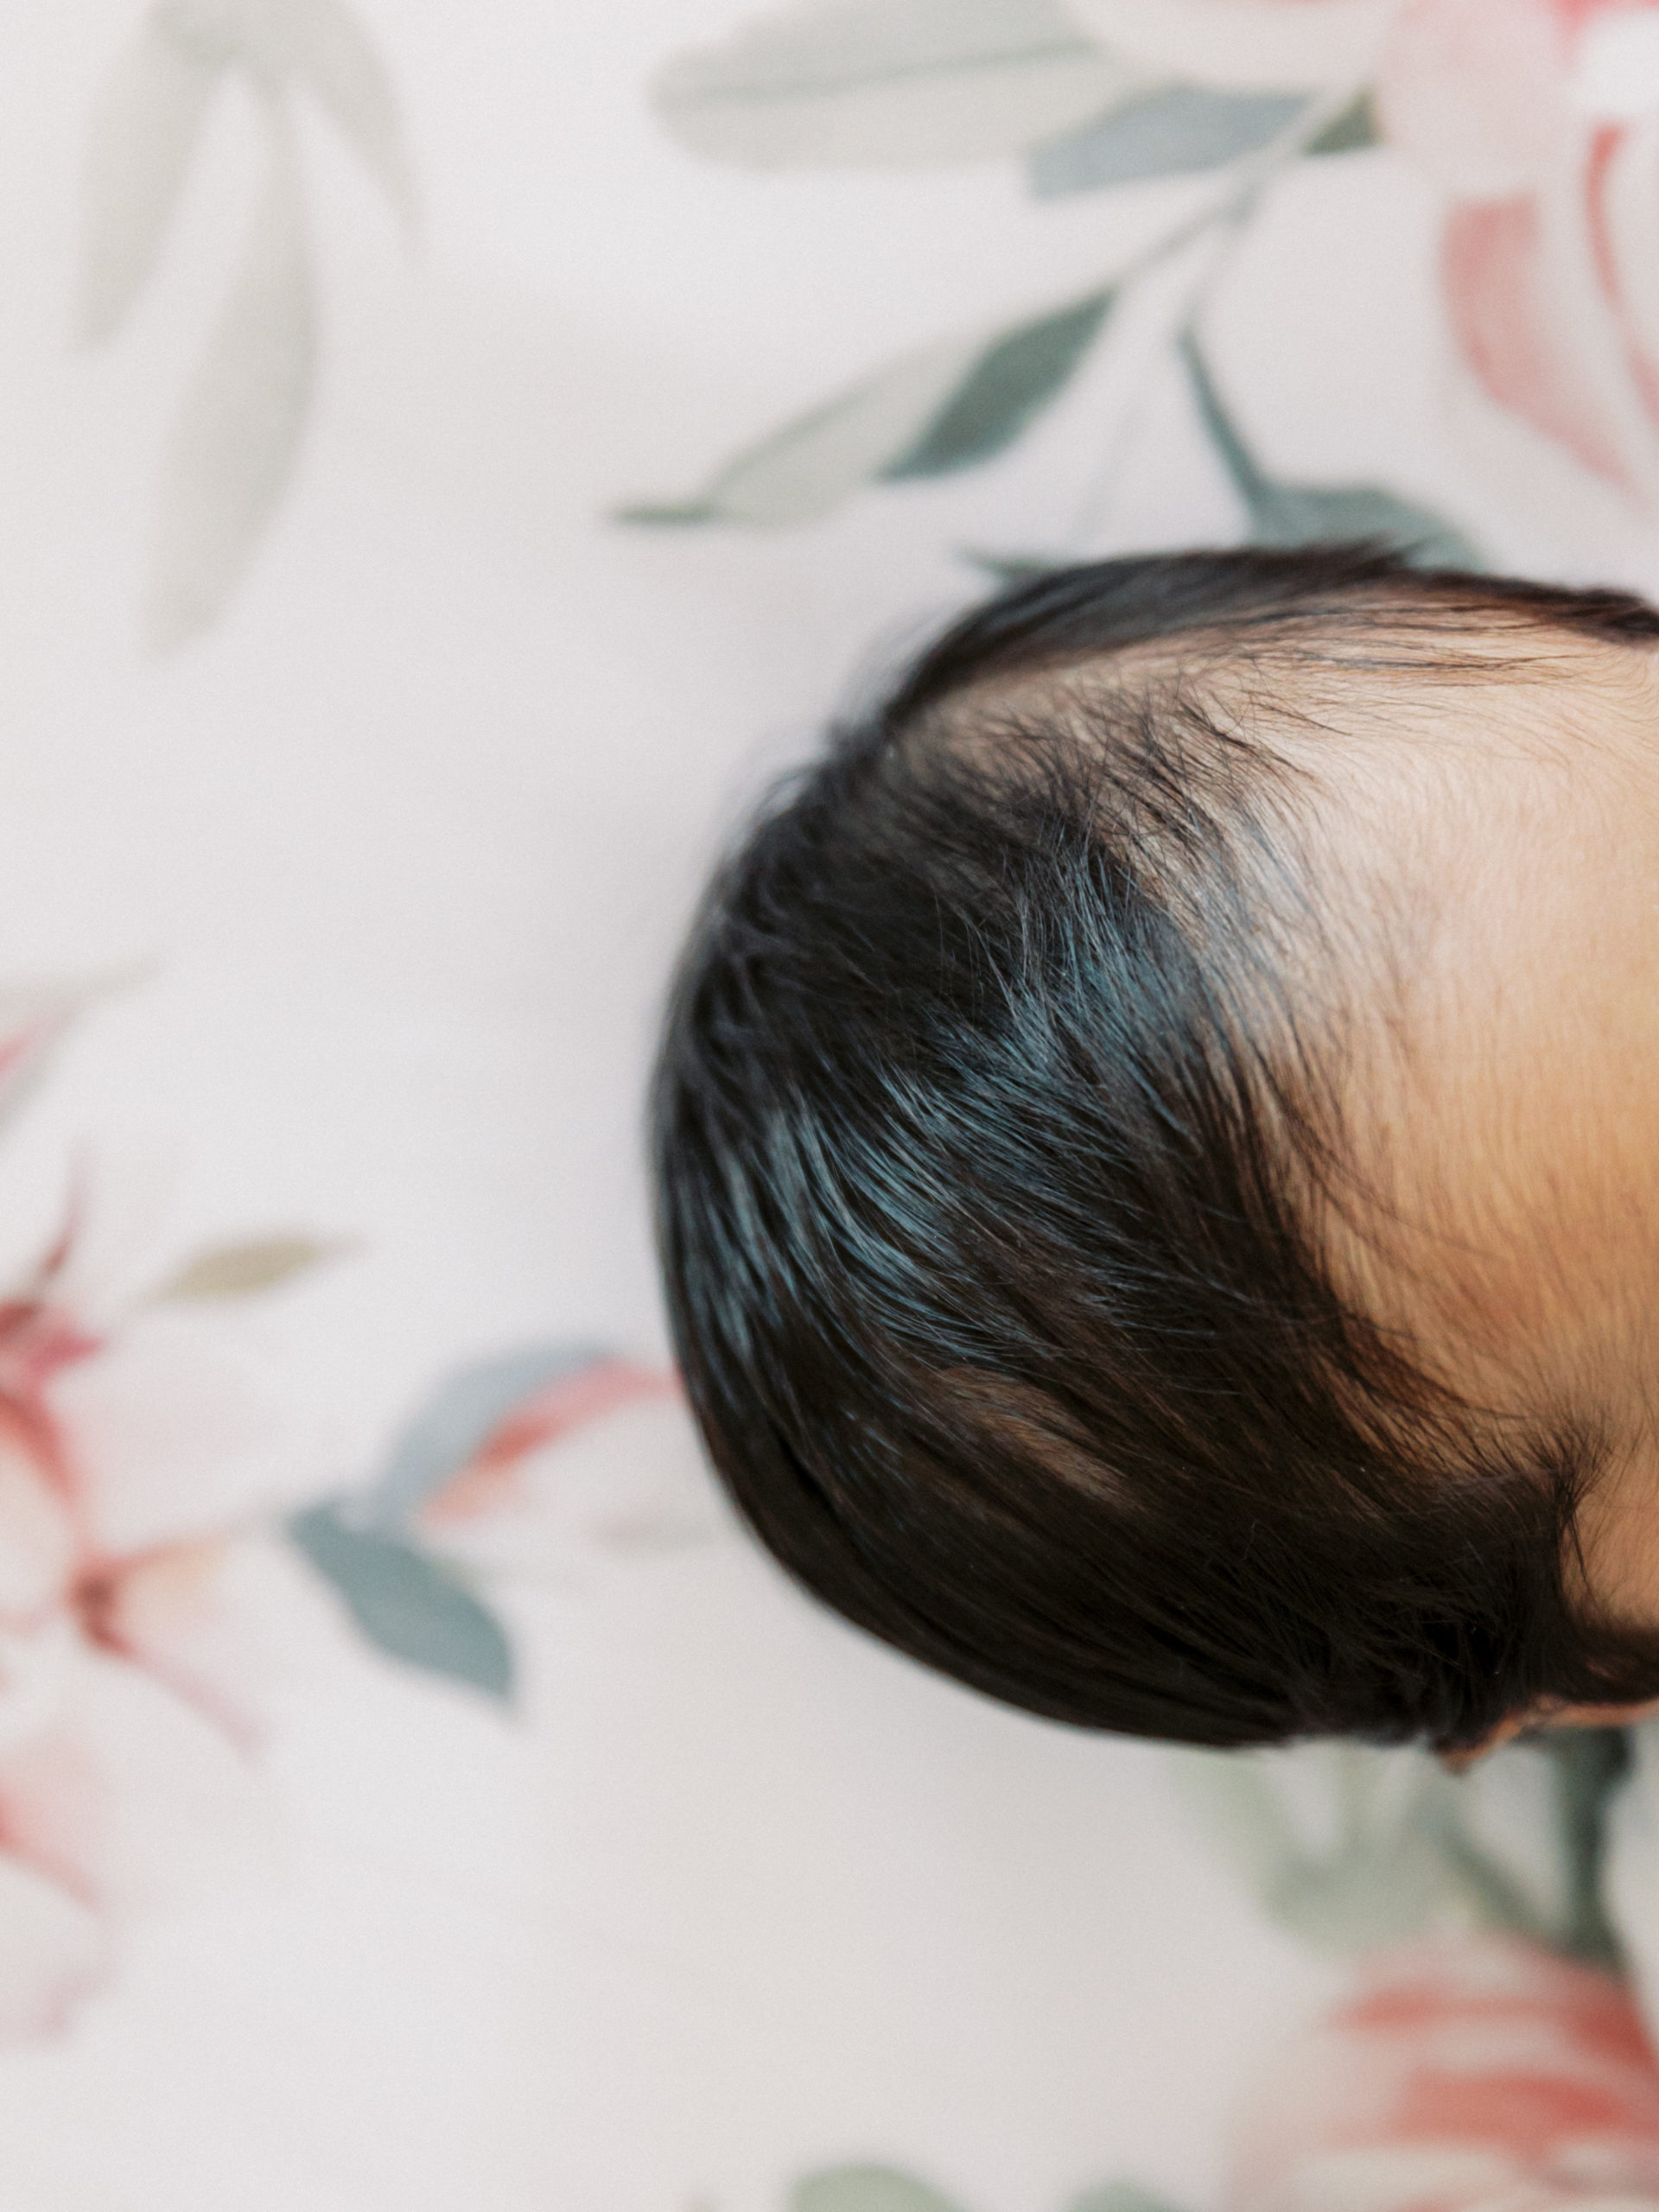 yuma-newborn-photography-baby-girl-sleeping-crib-portrait